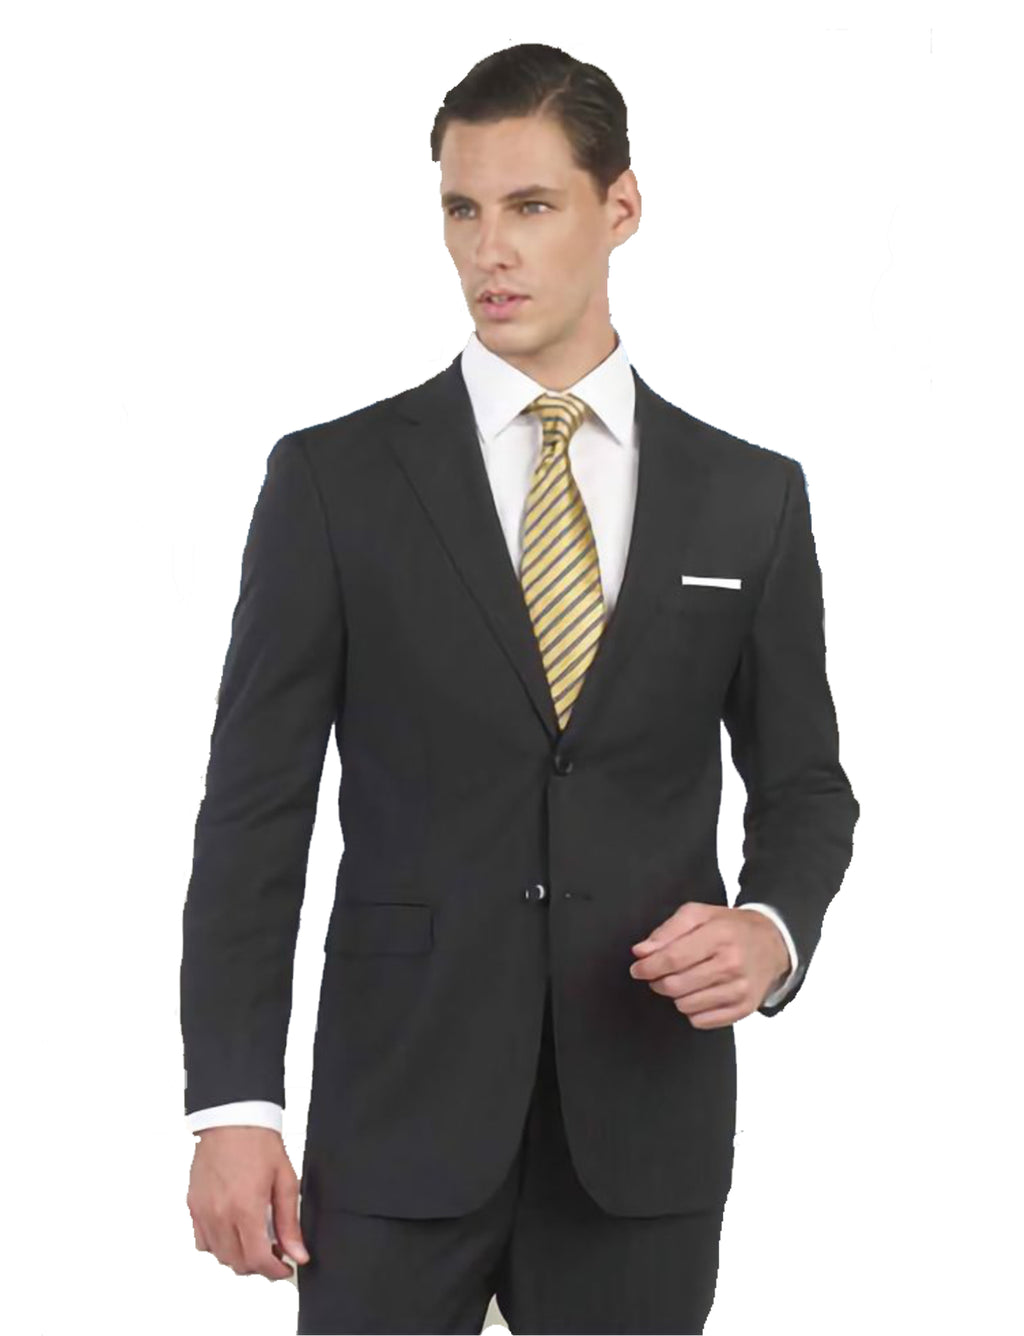 Mantoni Super 140 Wool Suit- Light Gray 46306-2